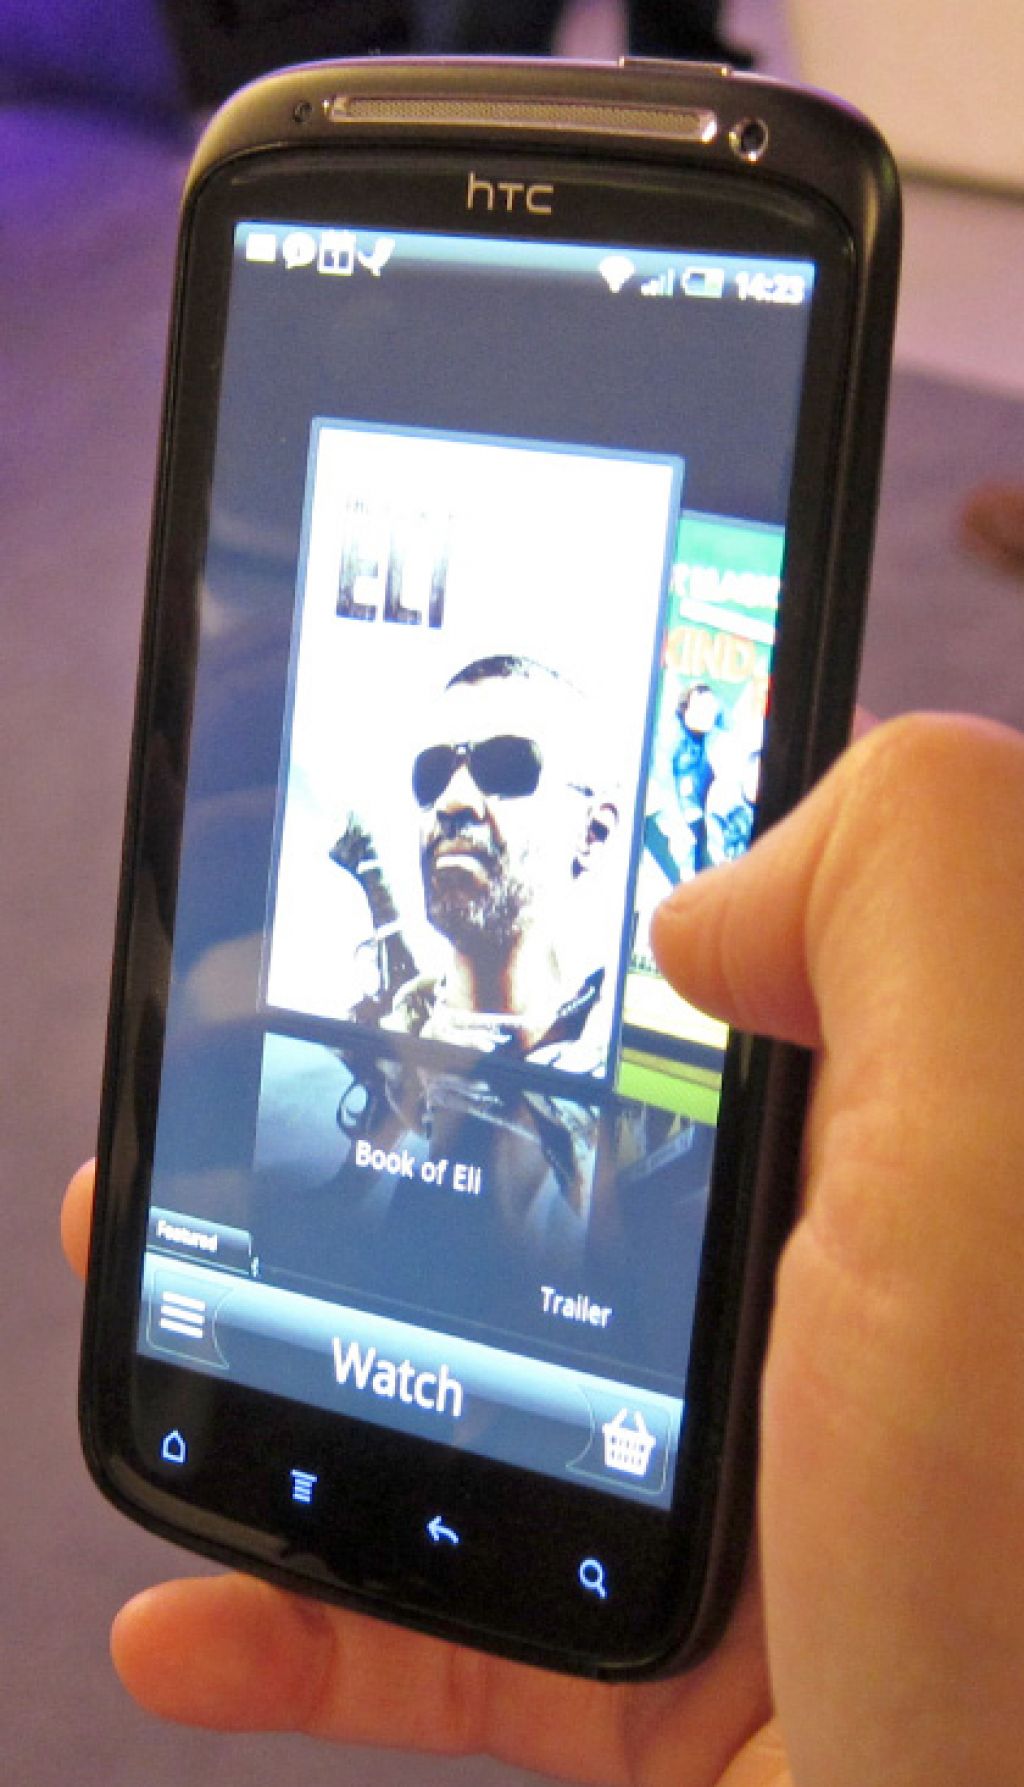 HTC s telefonom z dvojedrnim procesorjem lovi konkurenco